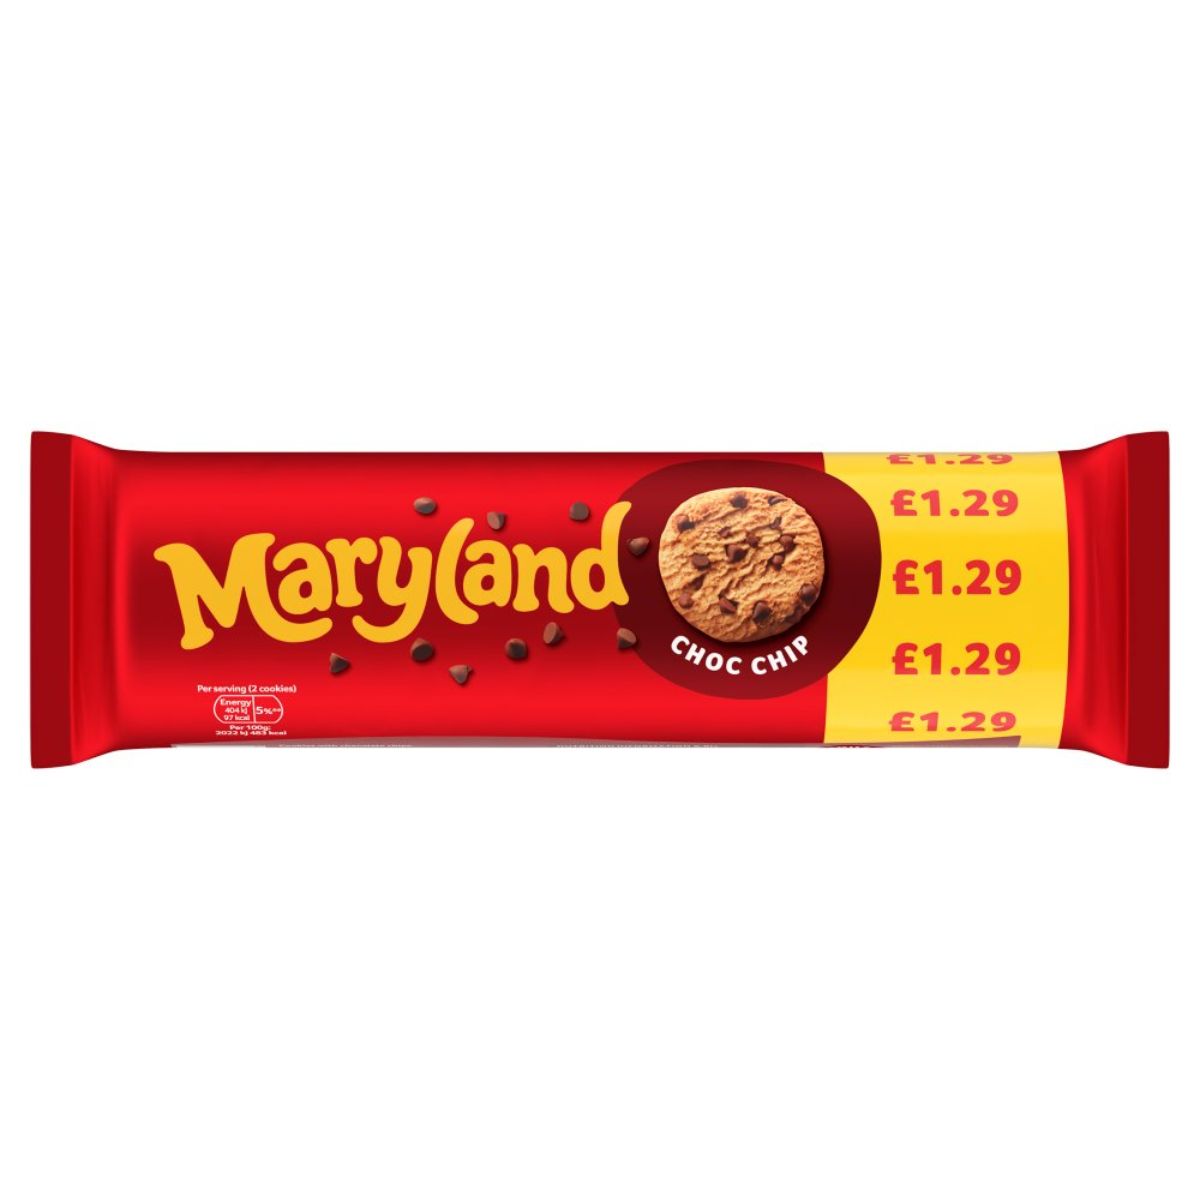 Maryland - Choc Chip Cookies - 200g chocolate chip cookie bar.